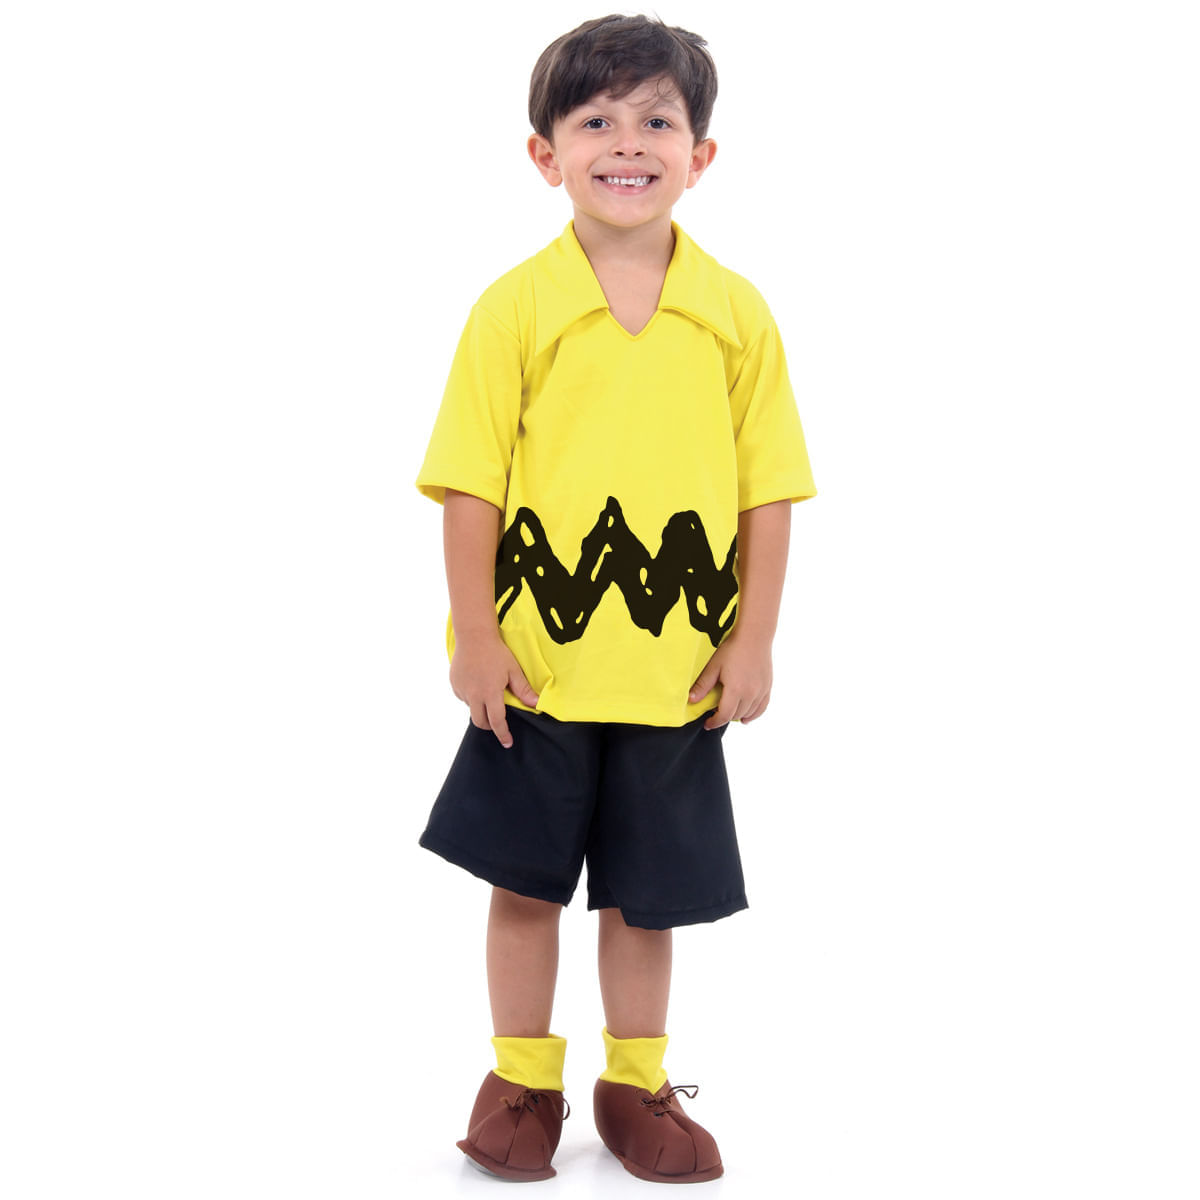 Fantasia Charlie Brown Infantil - Peanuts - Sula P / UNICA